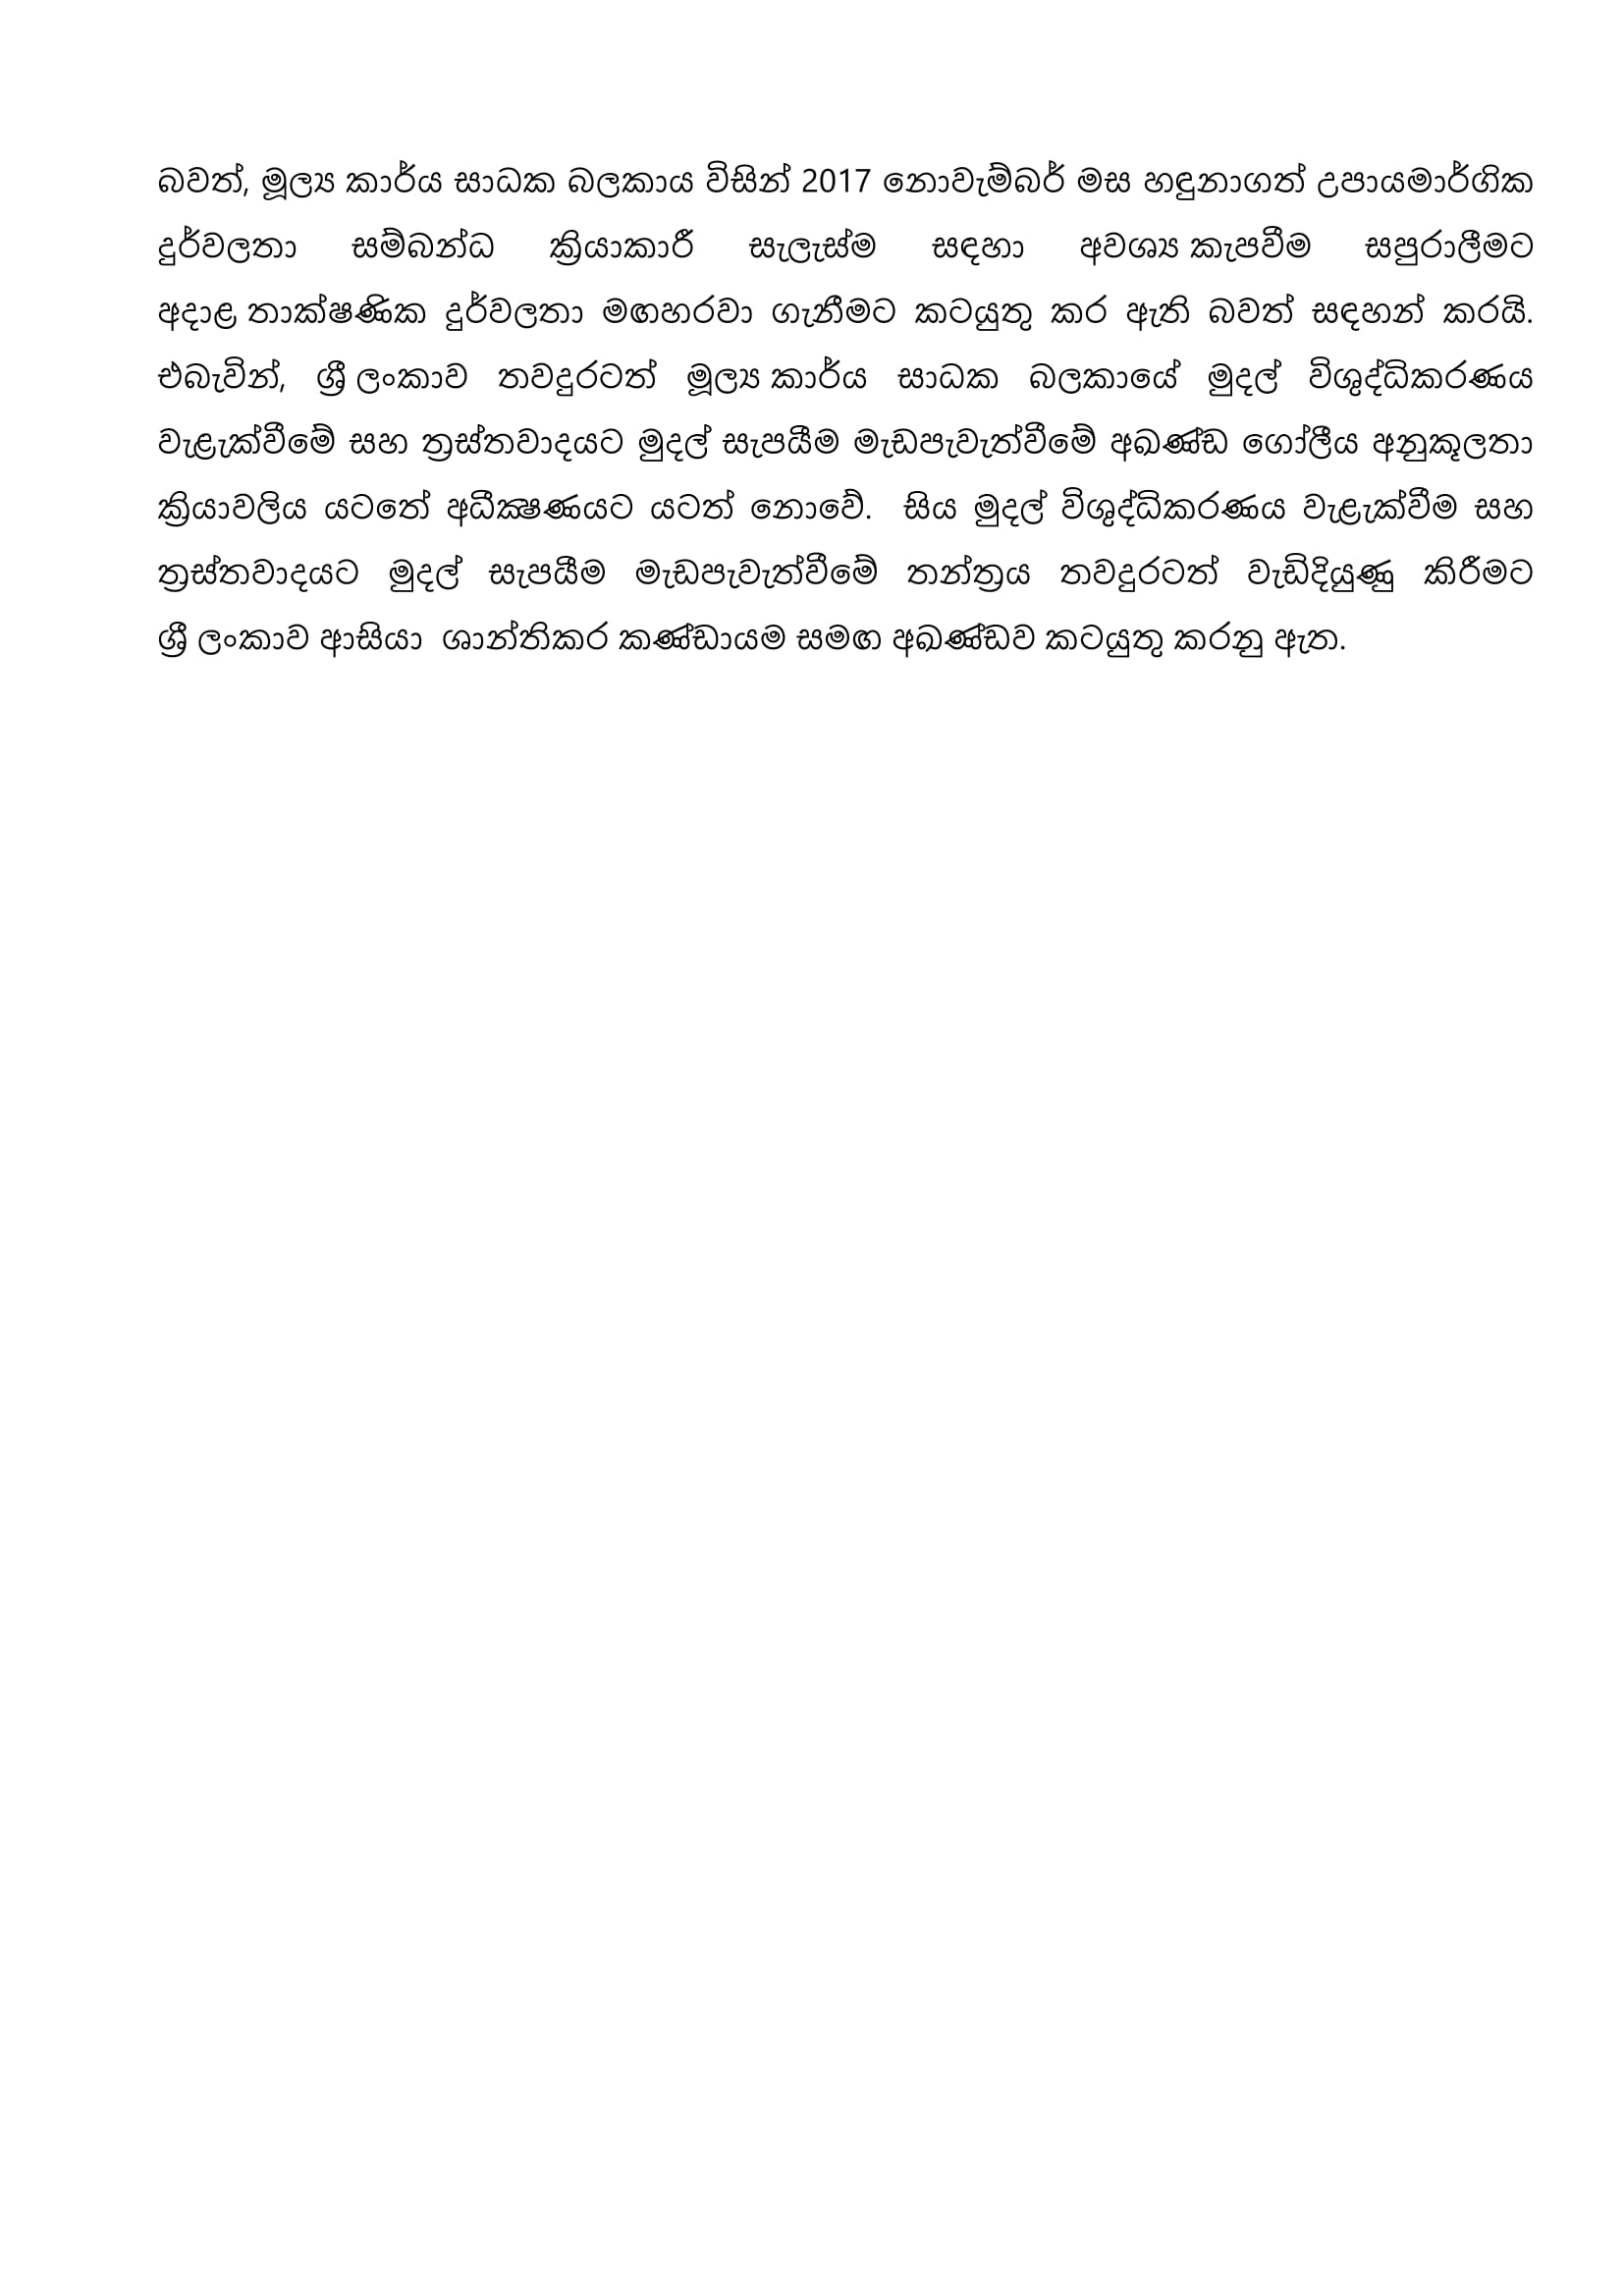 Press Release - 2019 10 21 Sinhala-4